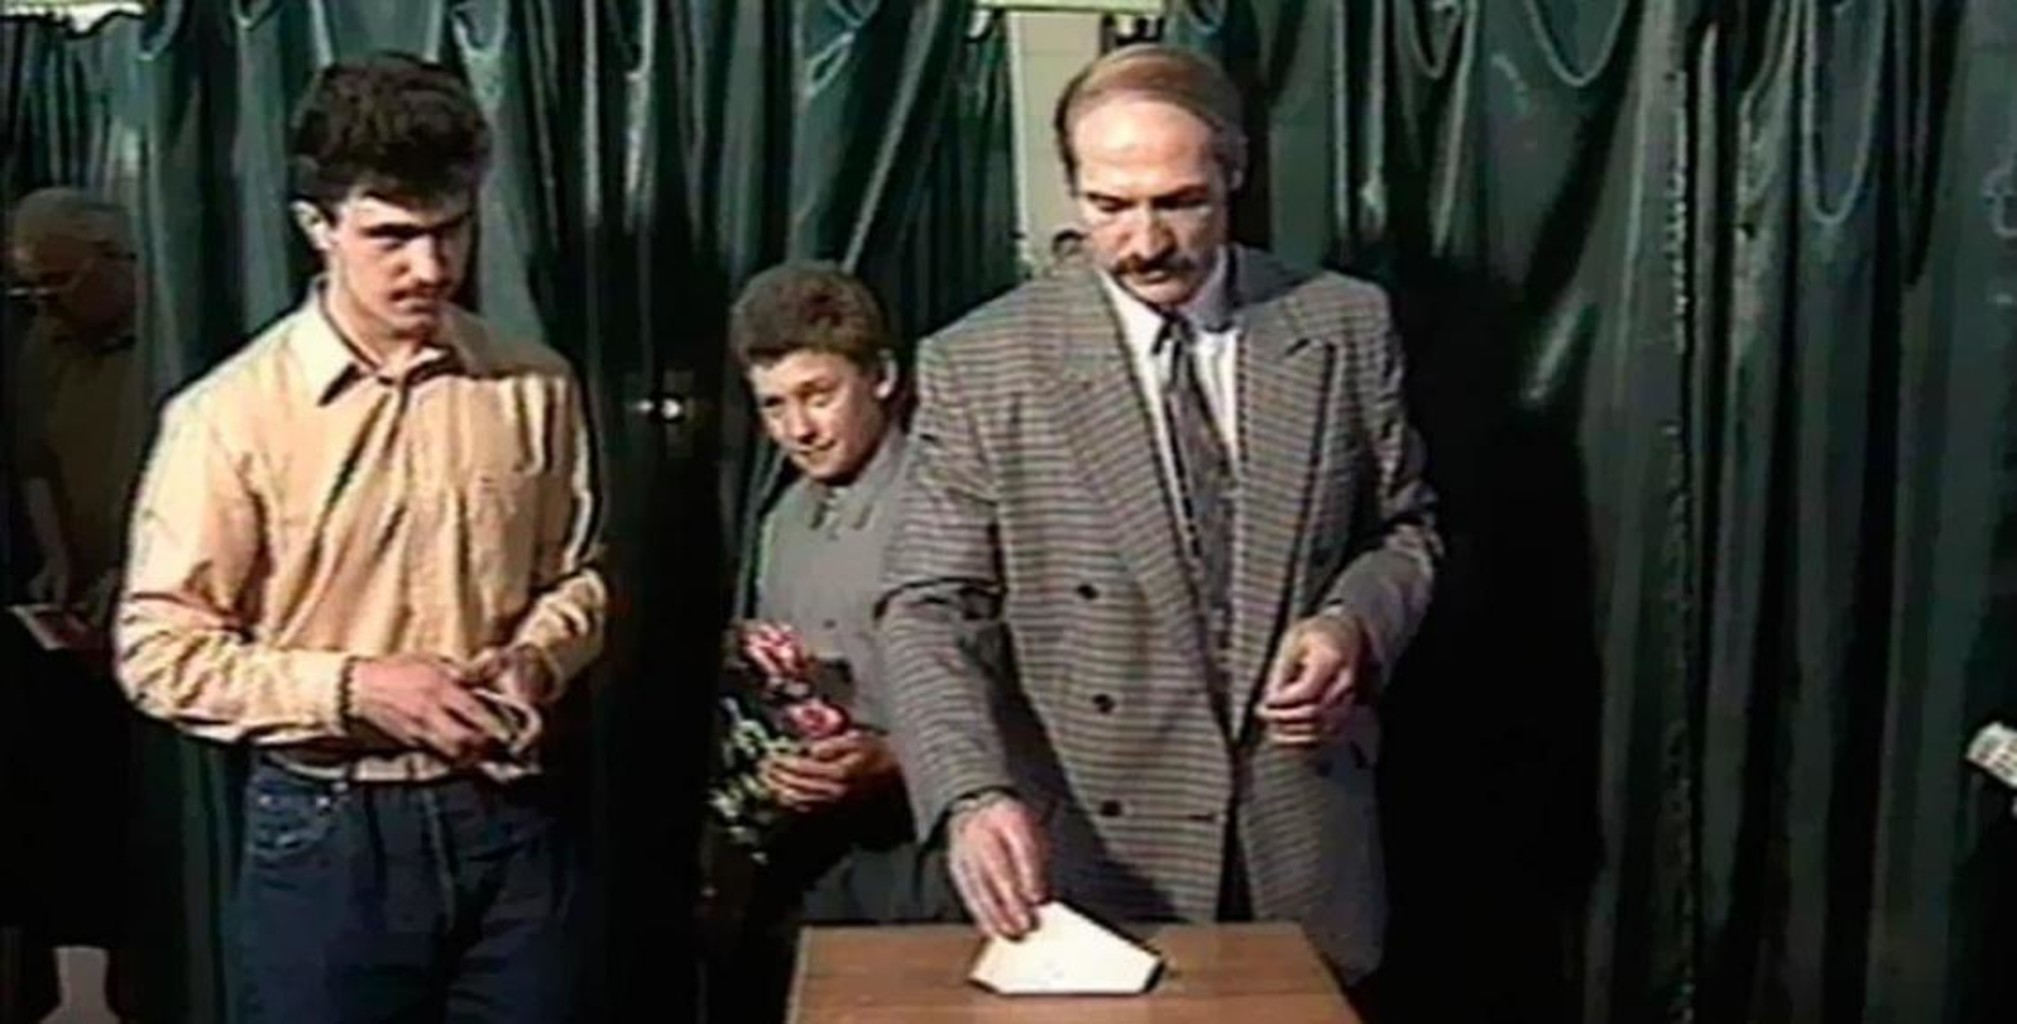 Выборы 2001 года. Беларусь 1994 Лукашенко. Лукашенко 1994 фото.